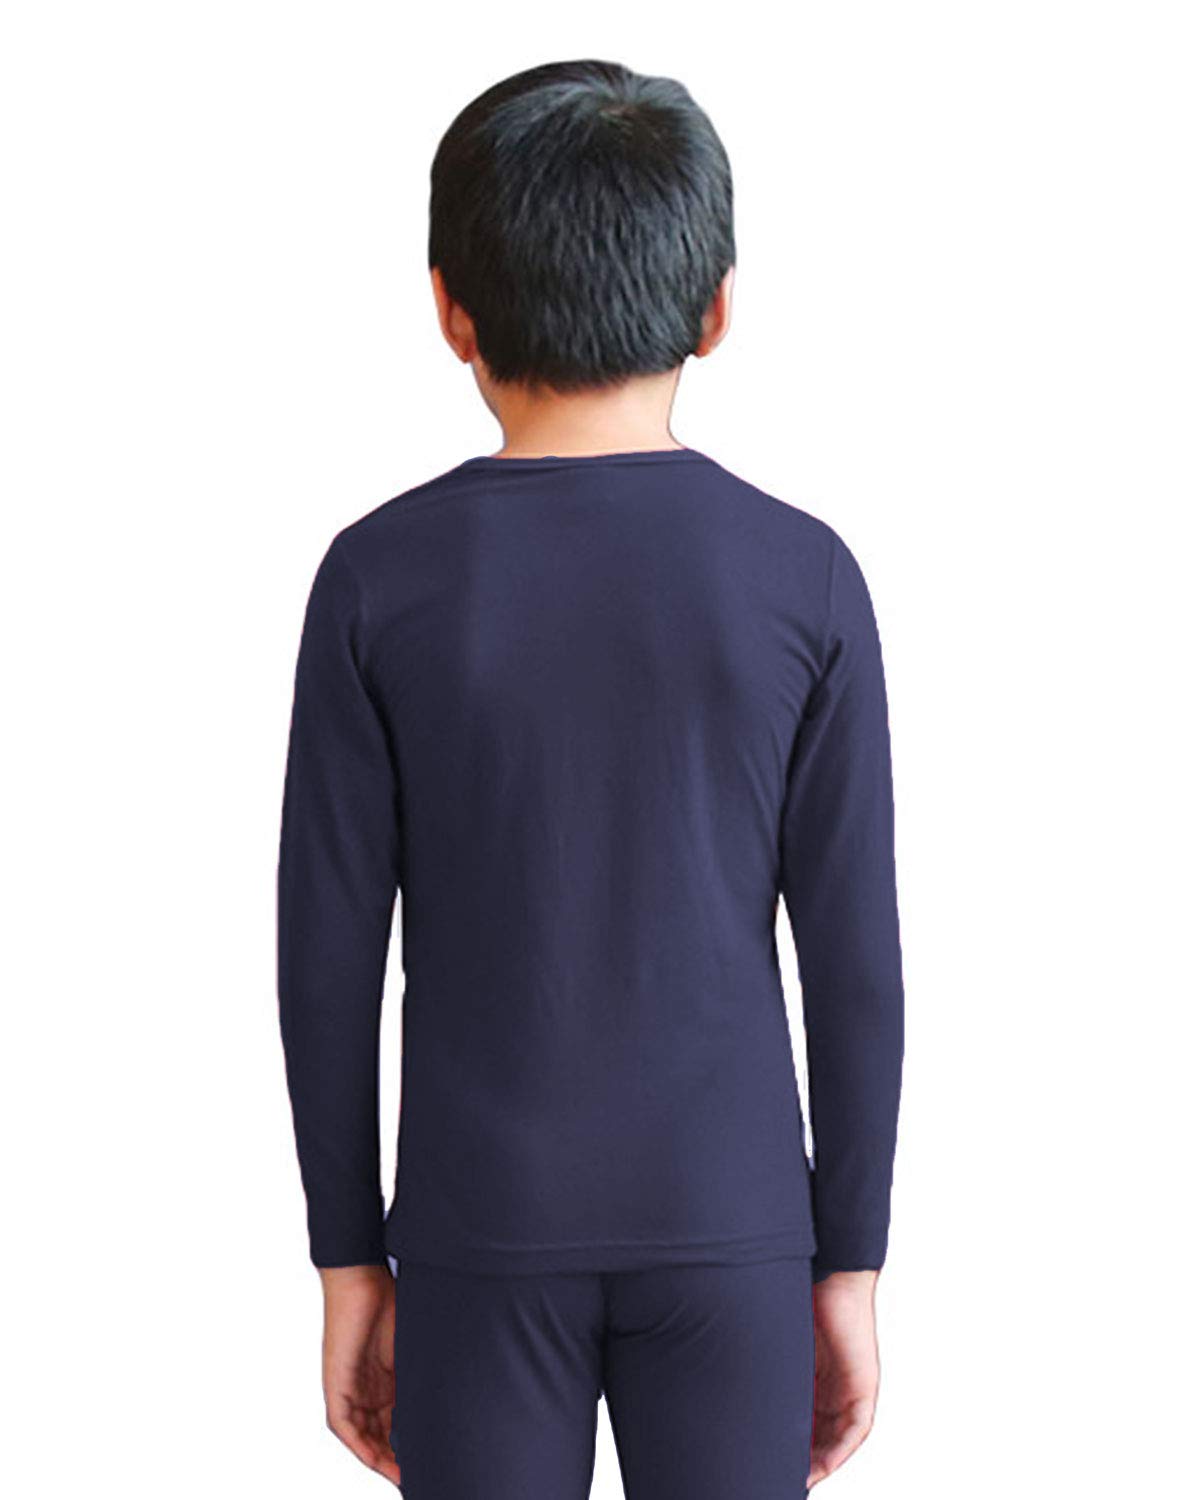 LANBAOSI Boys Girls Base Layers Compression Shirts&Pants Long Johns Set Size  12 